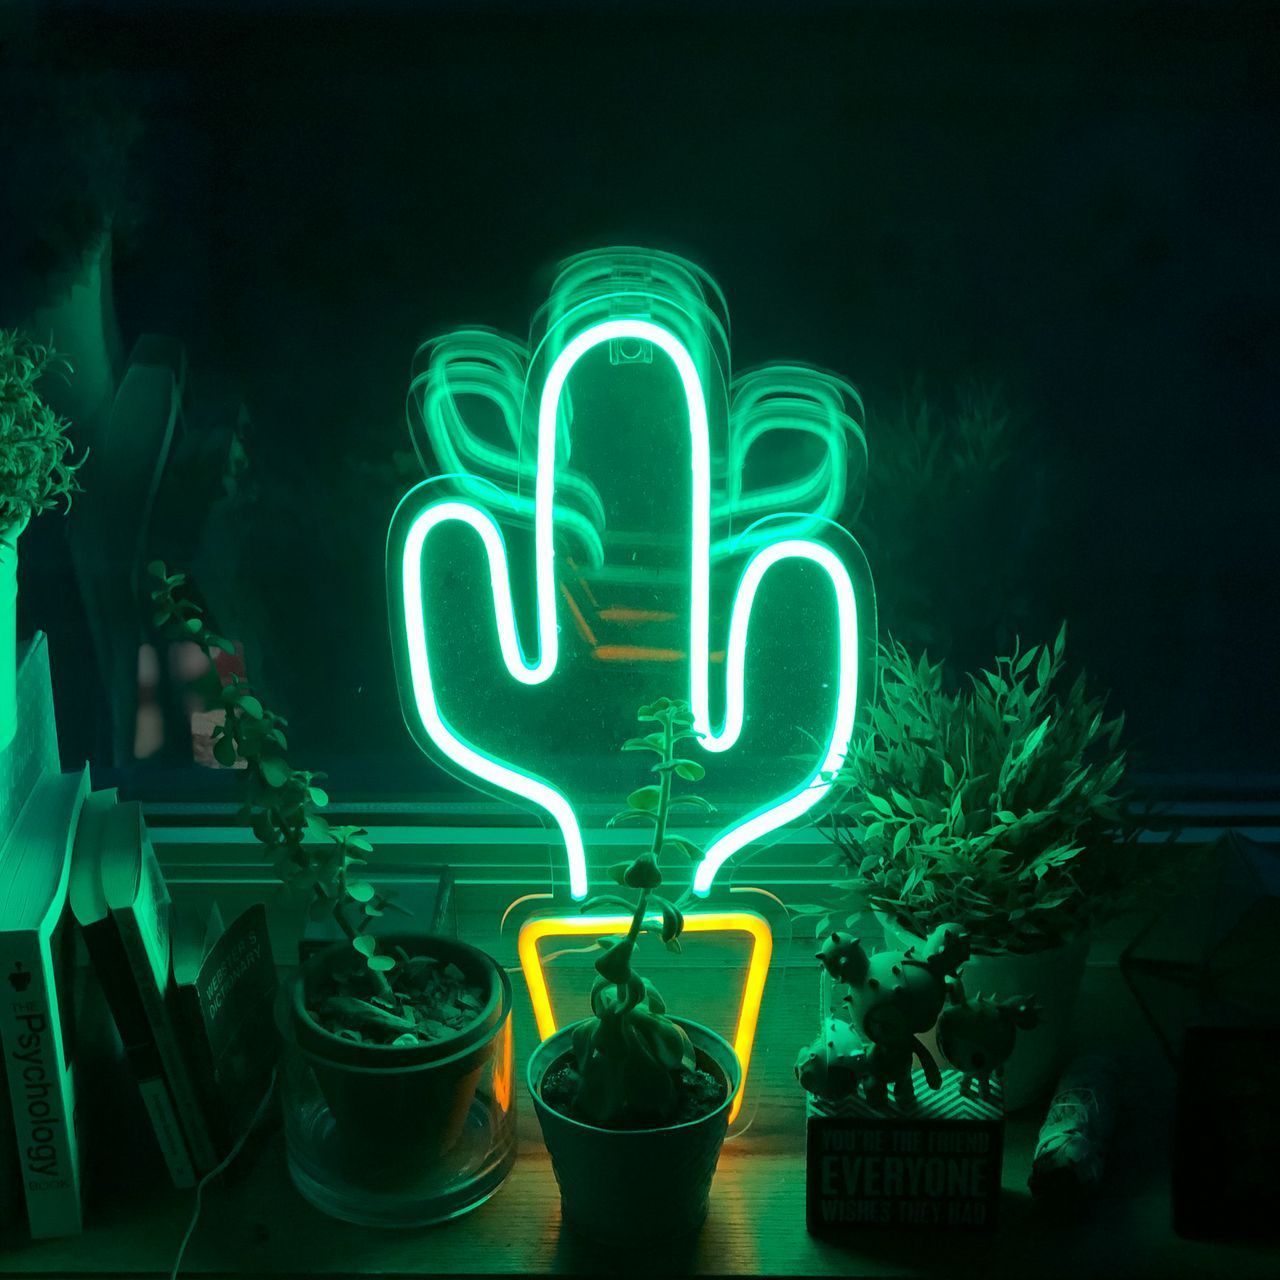 Download wallpaper 1280x1280 neon, cactus, flowers, light, green ipad, ipad ipad mini for parallax HD background